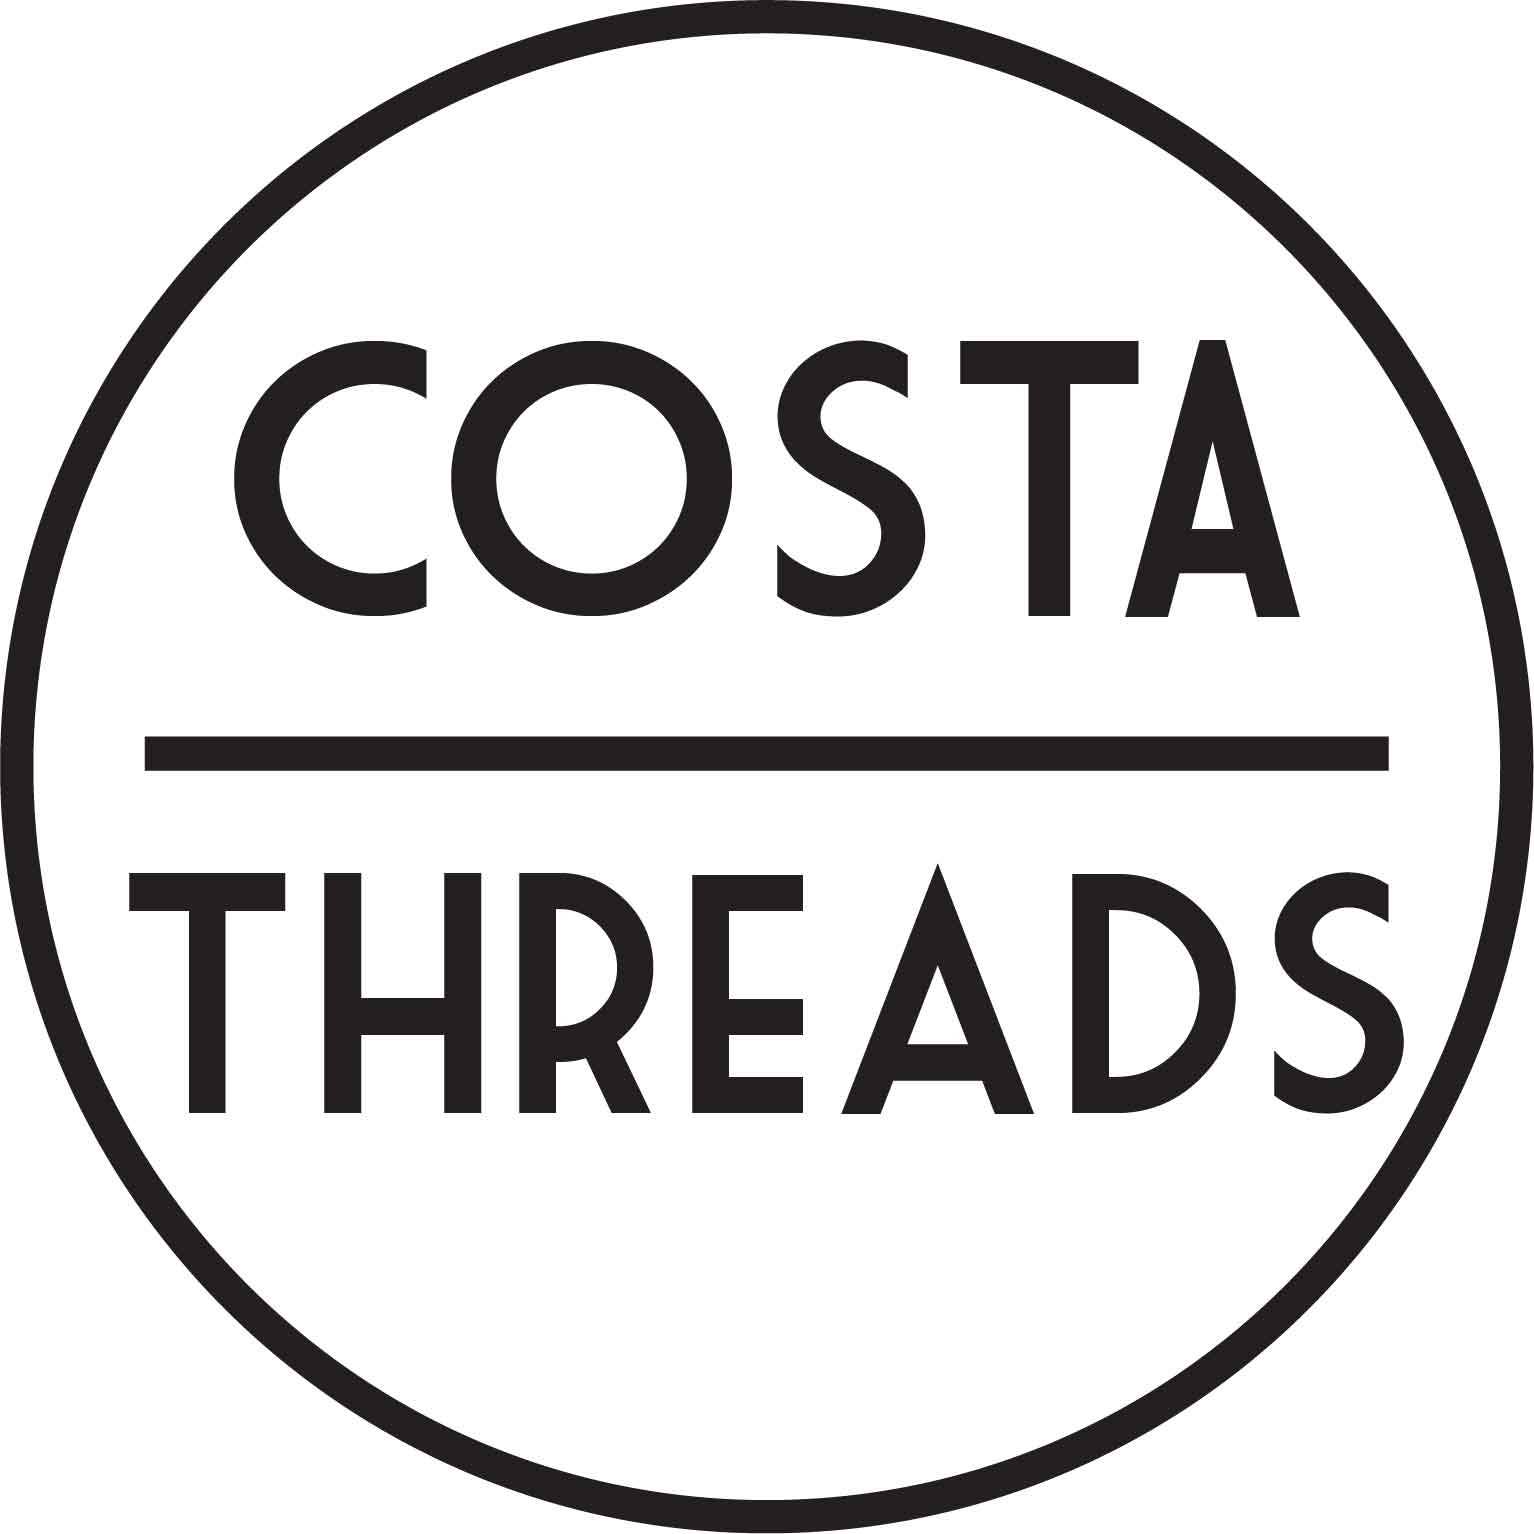 Costa Threads